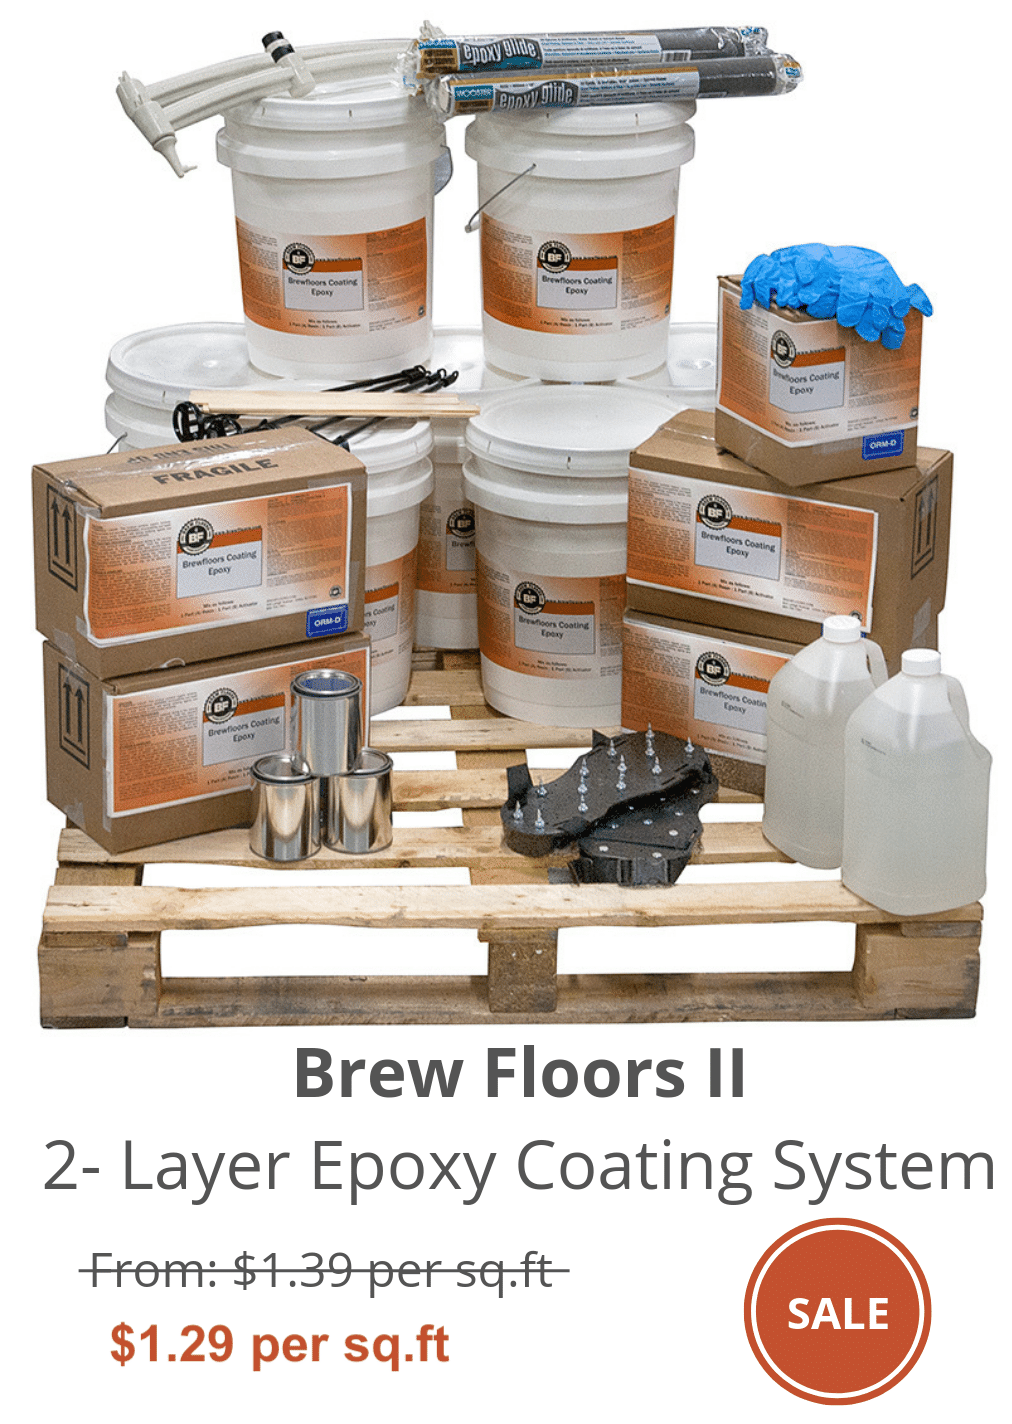 Epoxy Flooring Products Brewery Floor Coatings Brew Floors